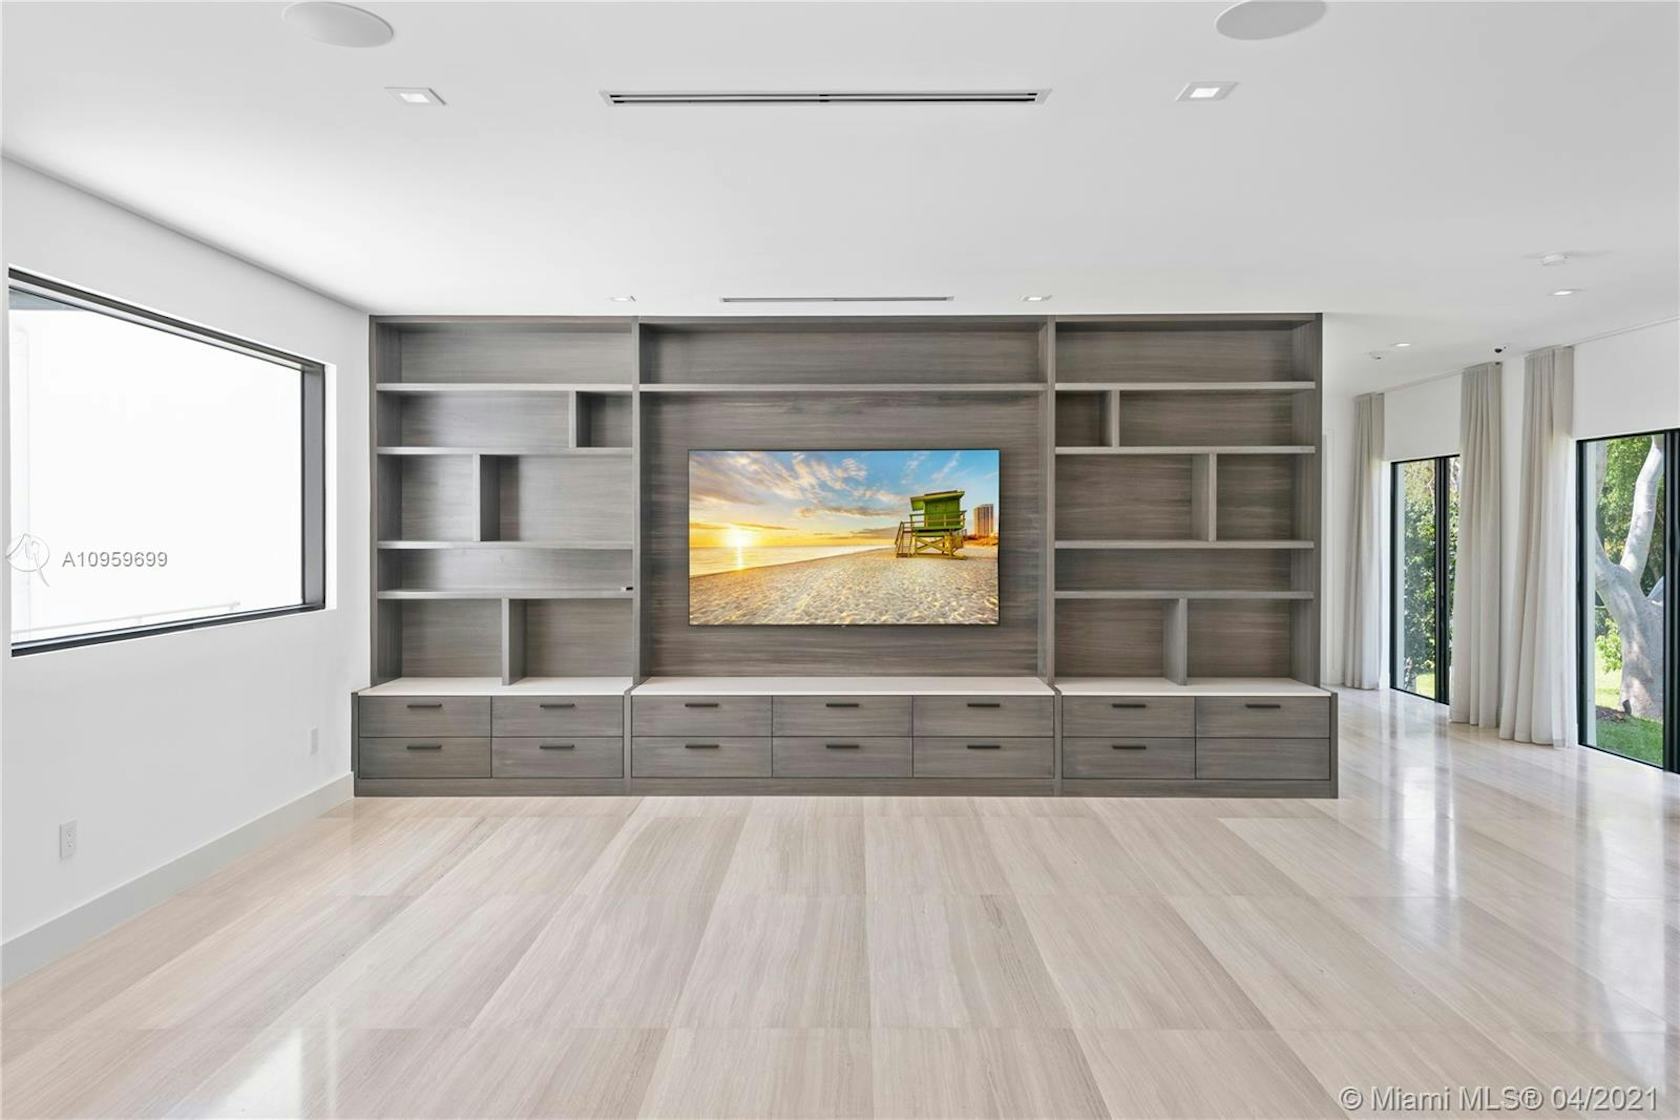 interior design indoors floor flooring room furniture living room monitor screen entertainment center